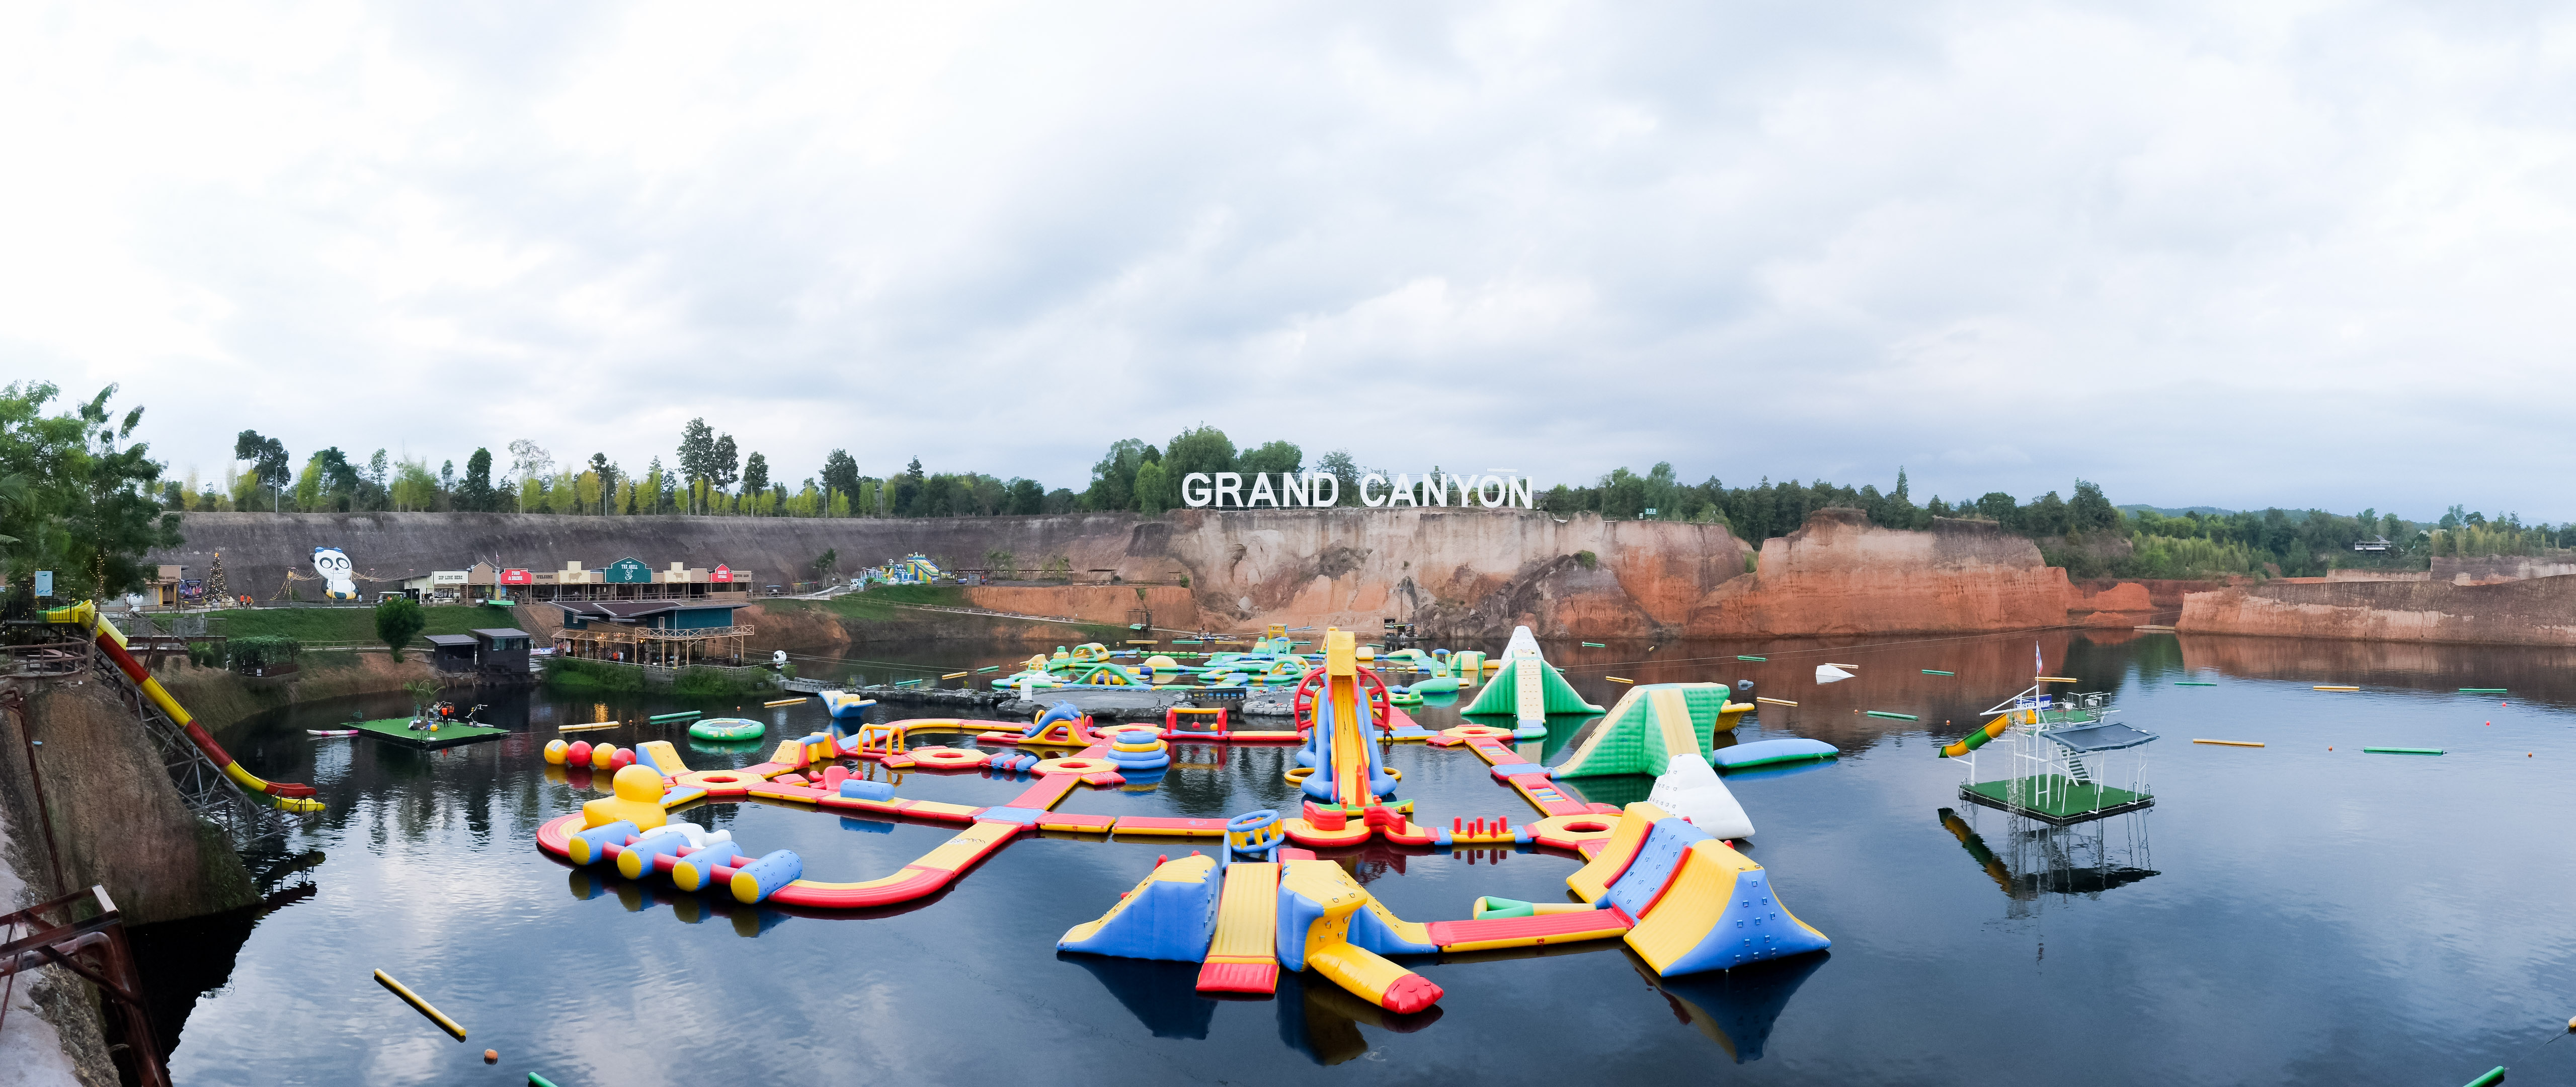 Grand Canyon Waterpark Chiang Mai - Waterpark Ticket / Wake Board 1 Hr.